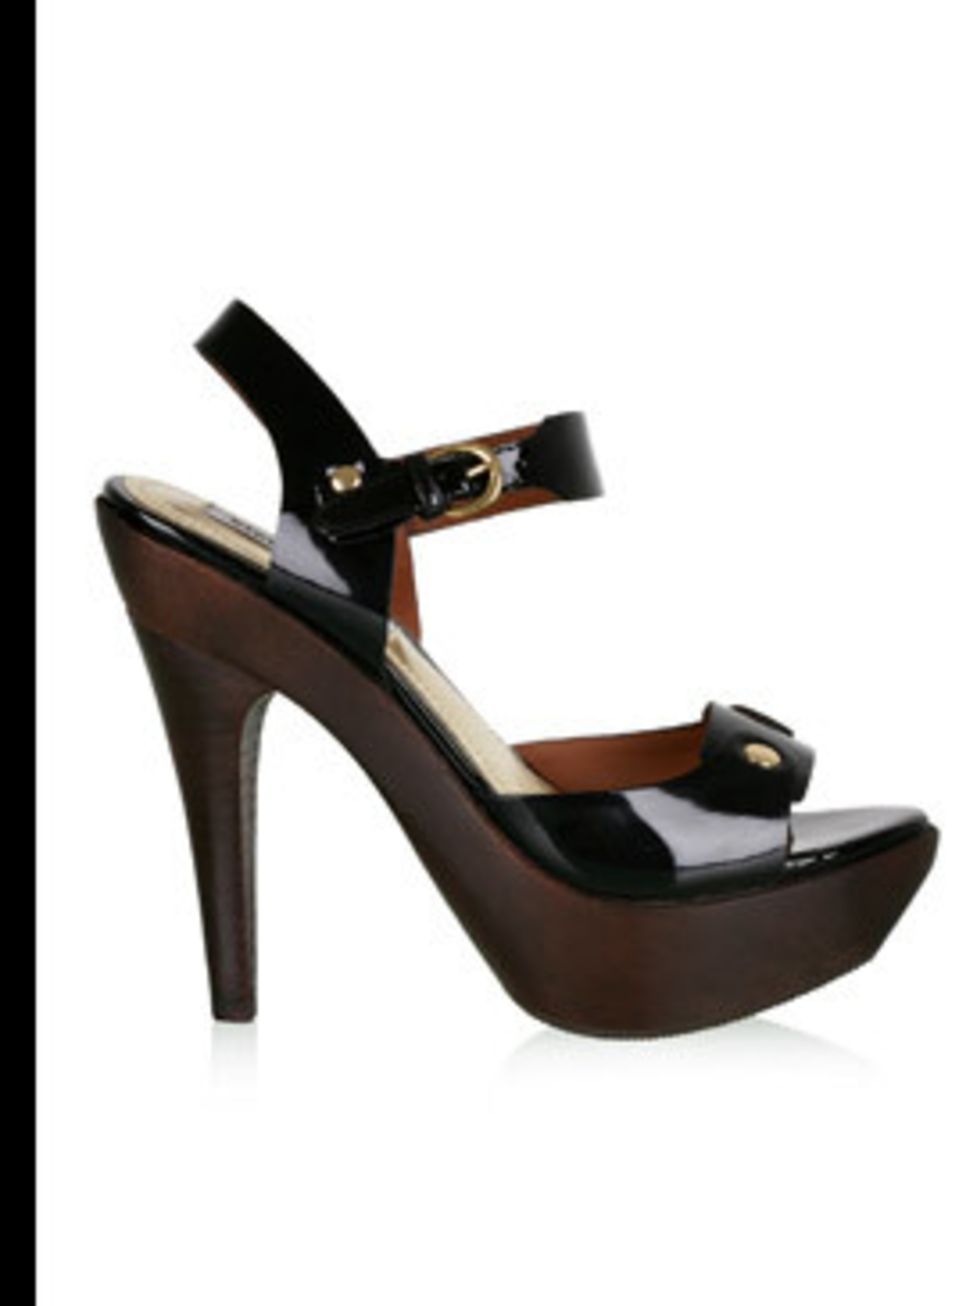 <p>Shoes, £115 by Steve Madden at <a href="http://www.my-wardrobe.com/steve-madden/black-patent-platform-peeptoe-168203">My-Wardrobe</a></p>